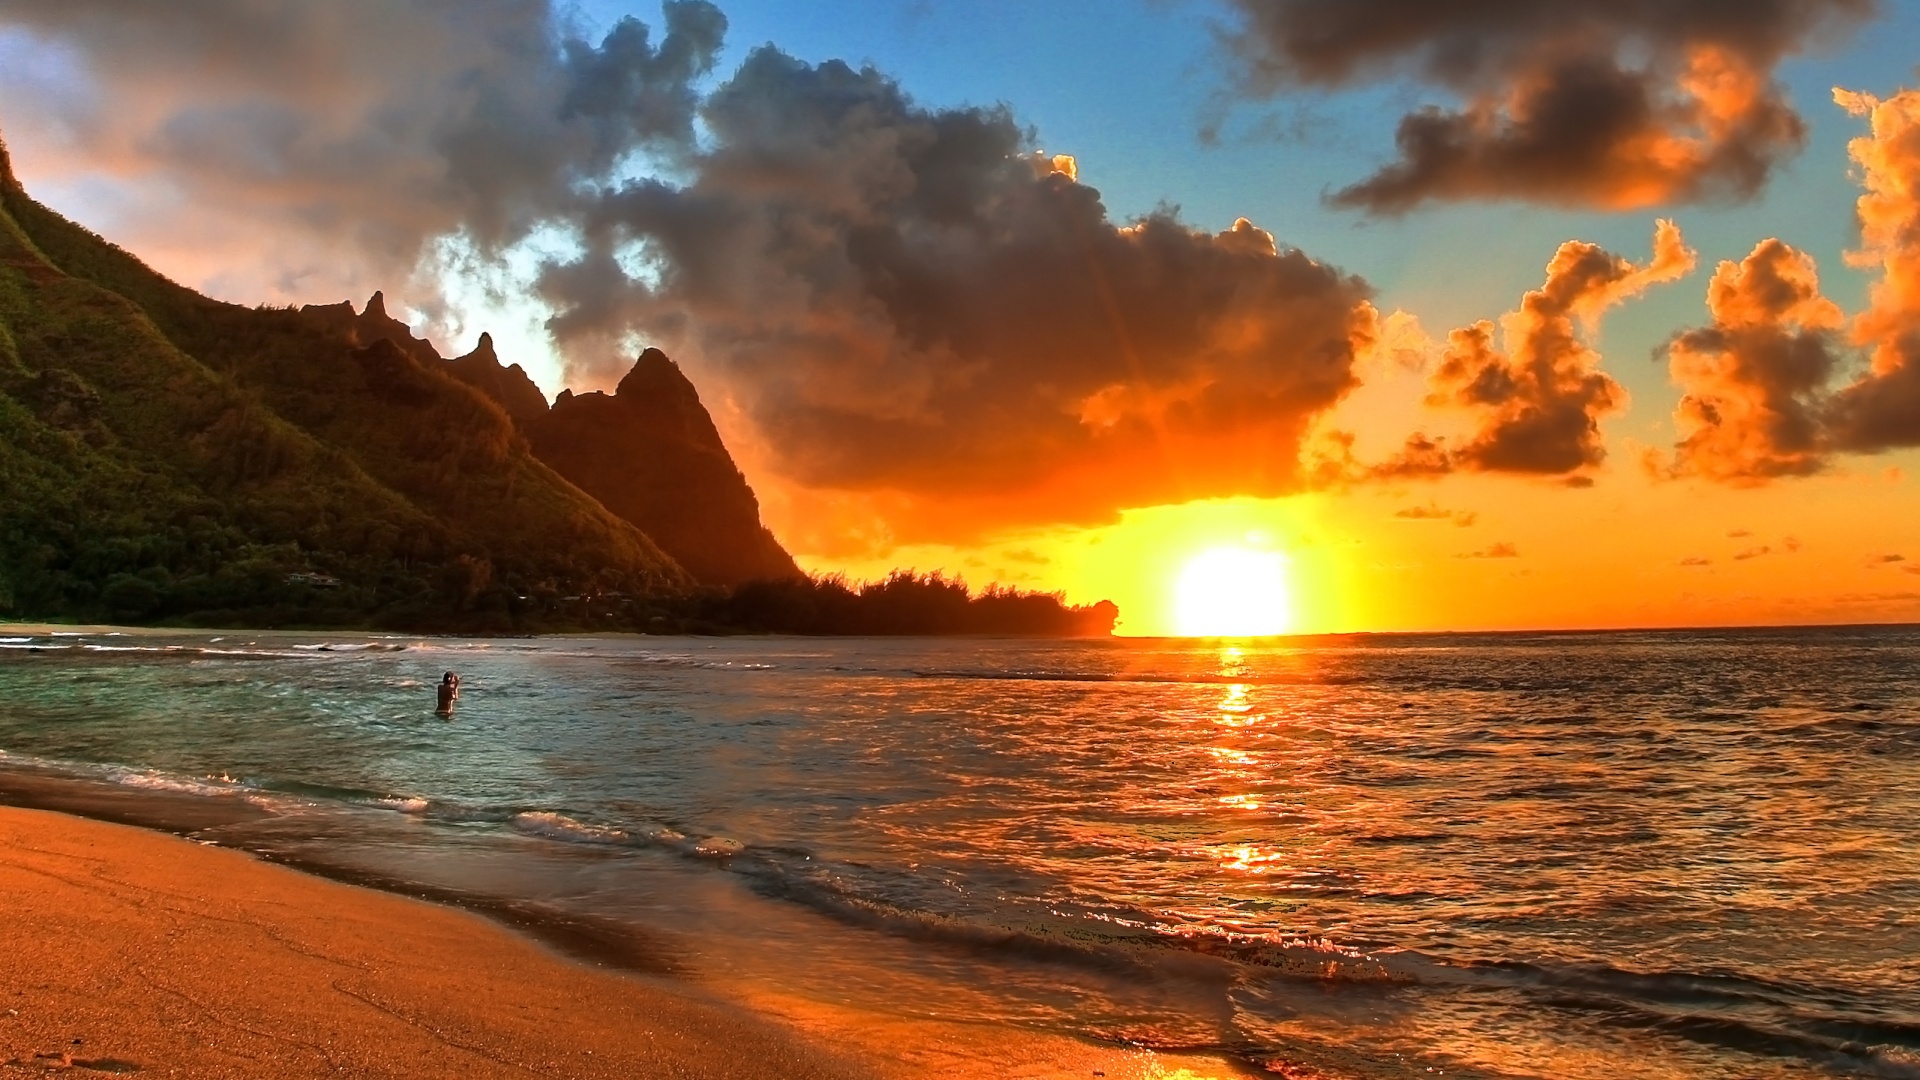 http://eskipaper.com/images/beach-sunset-beautiful-1.jpg